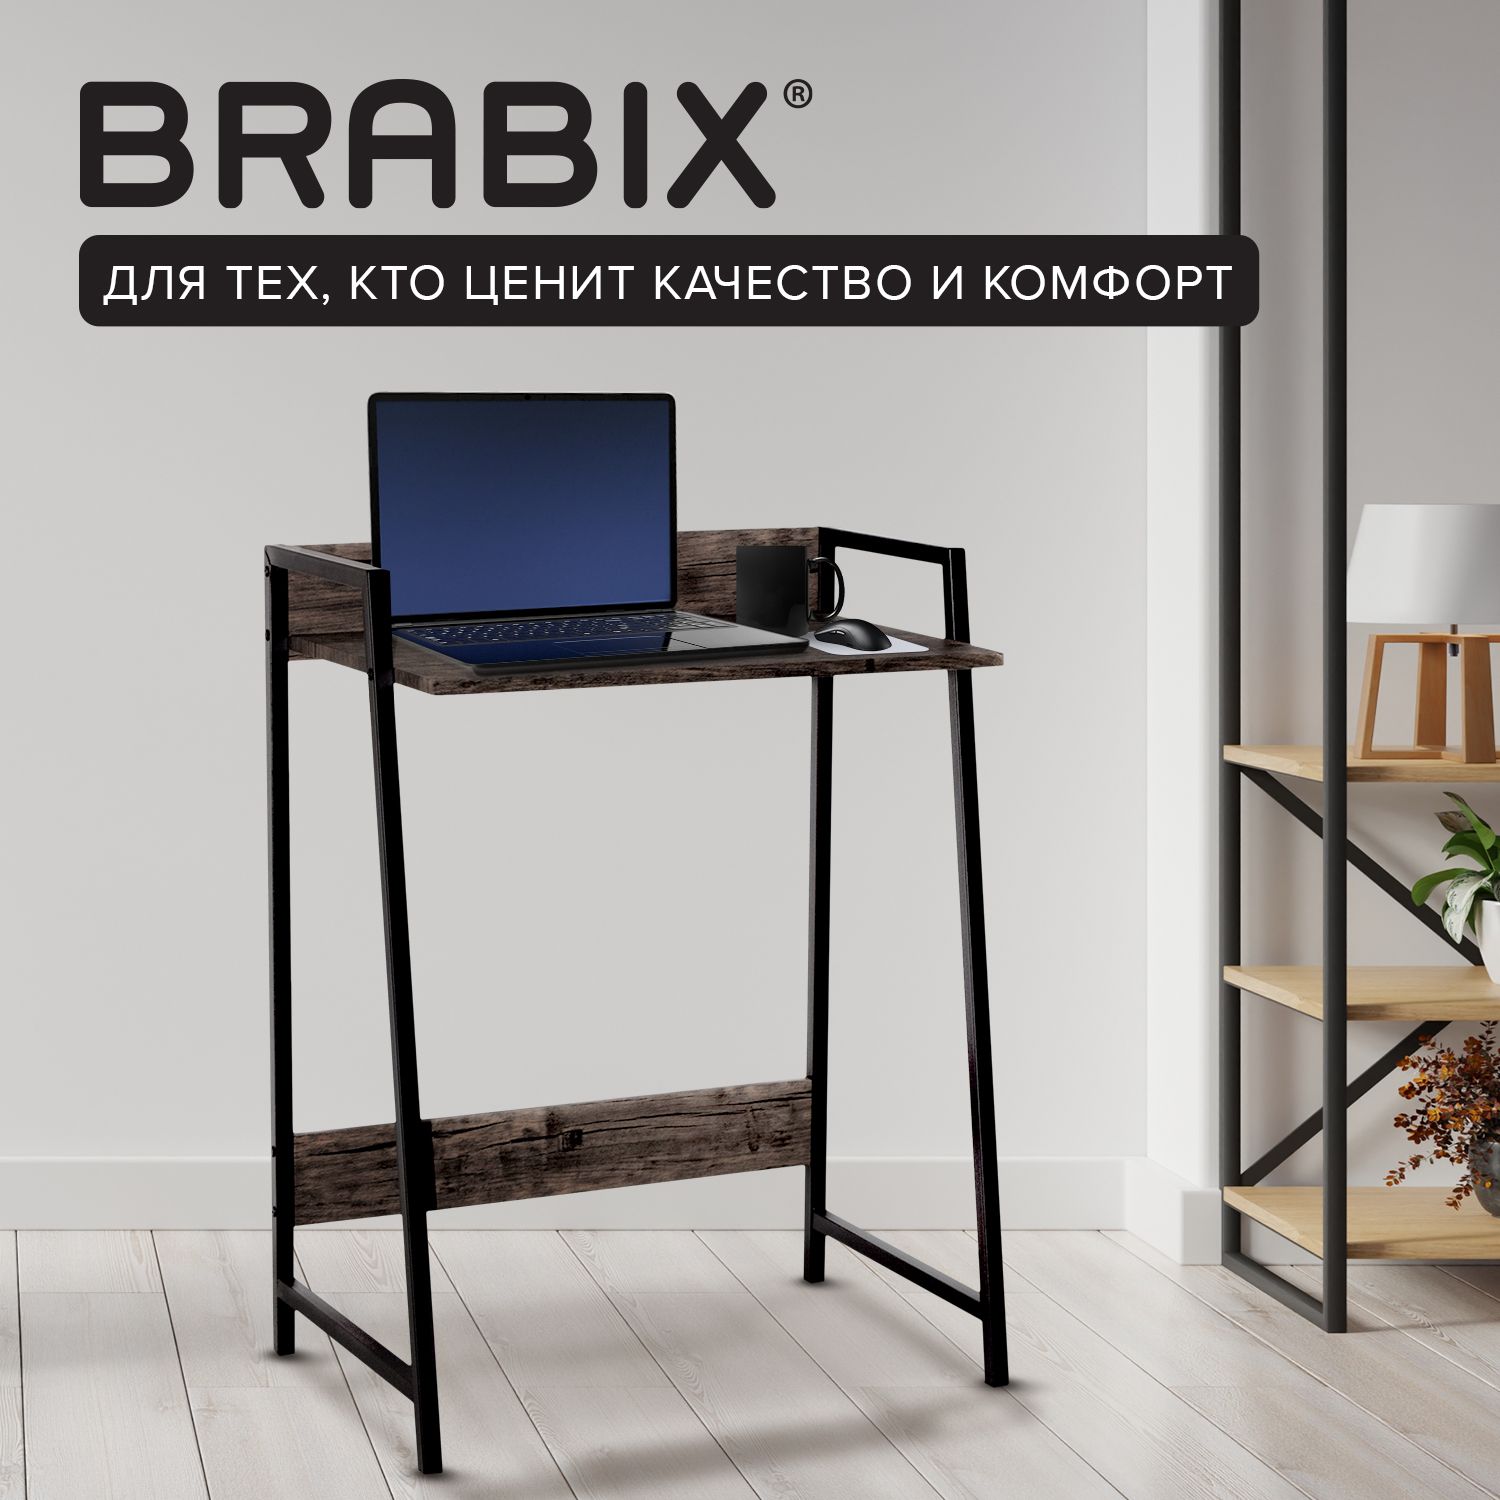 Brabix стол лофт